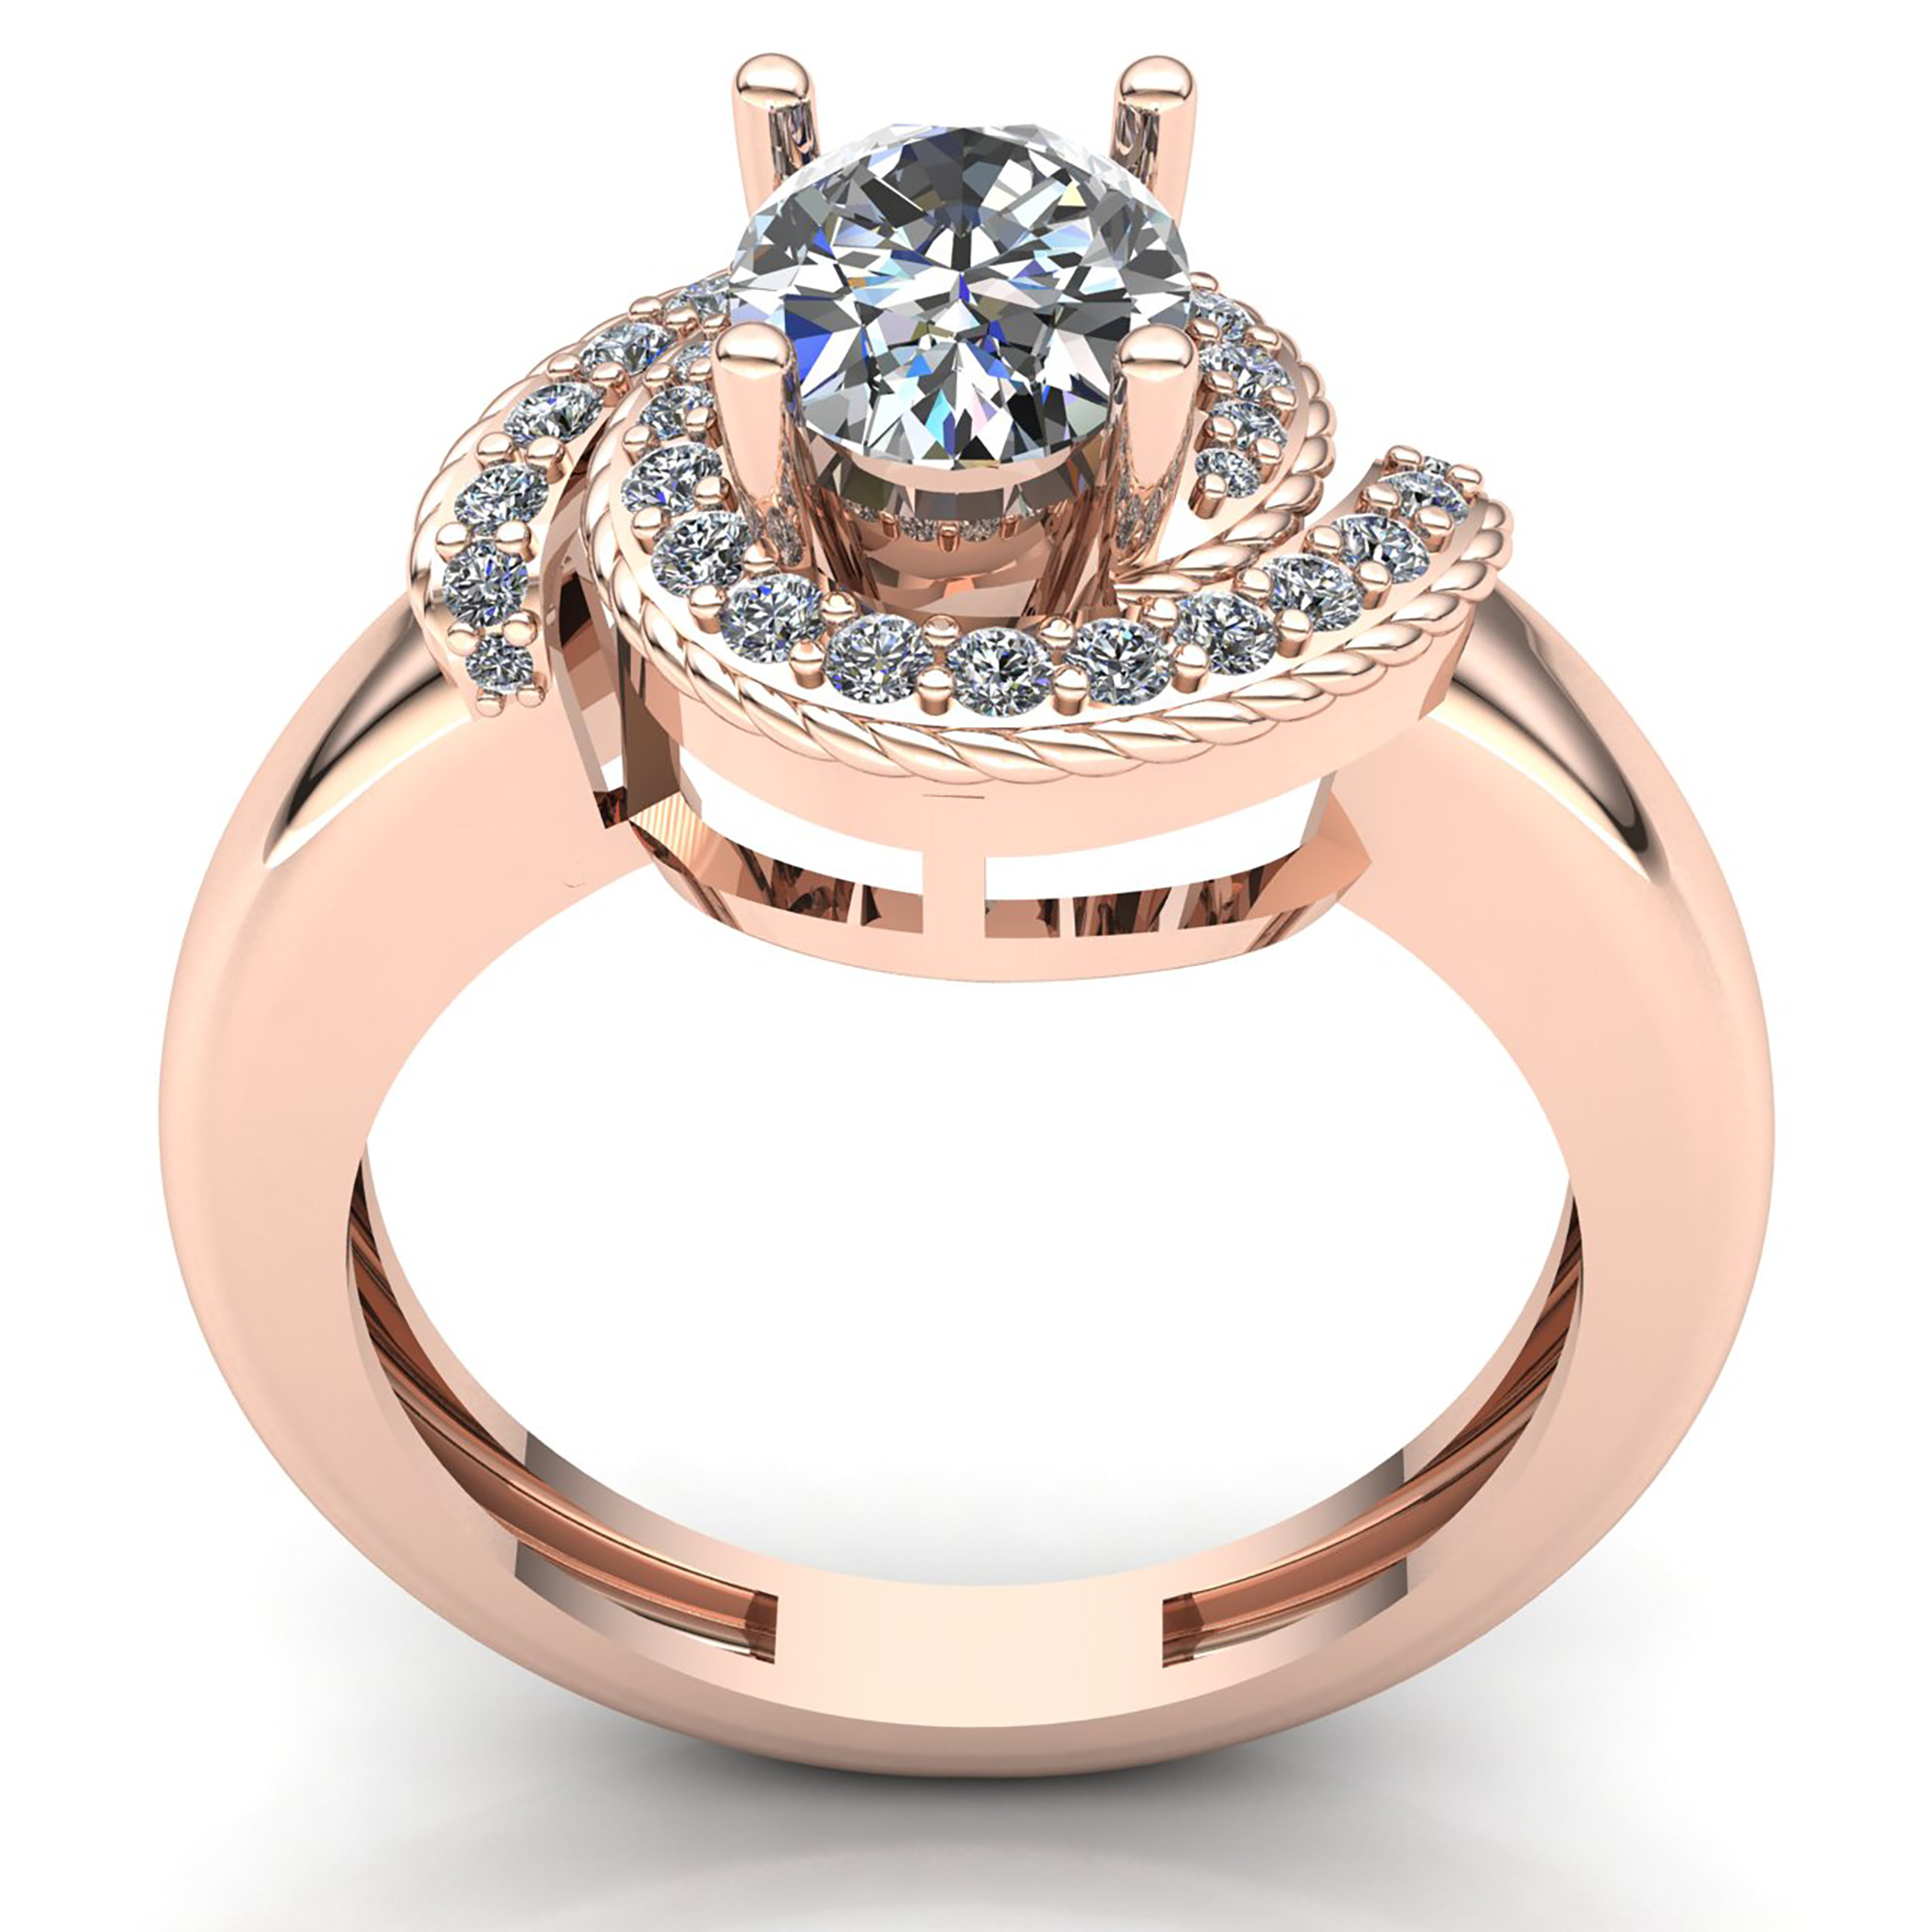 0.5ct Oval Diamond Ladies Swirl Solitaire Engagement Ring 14K Gold | eBay